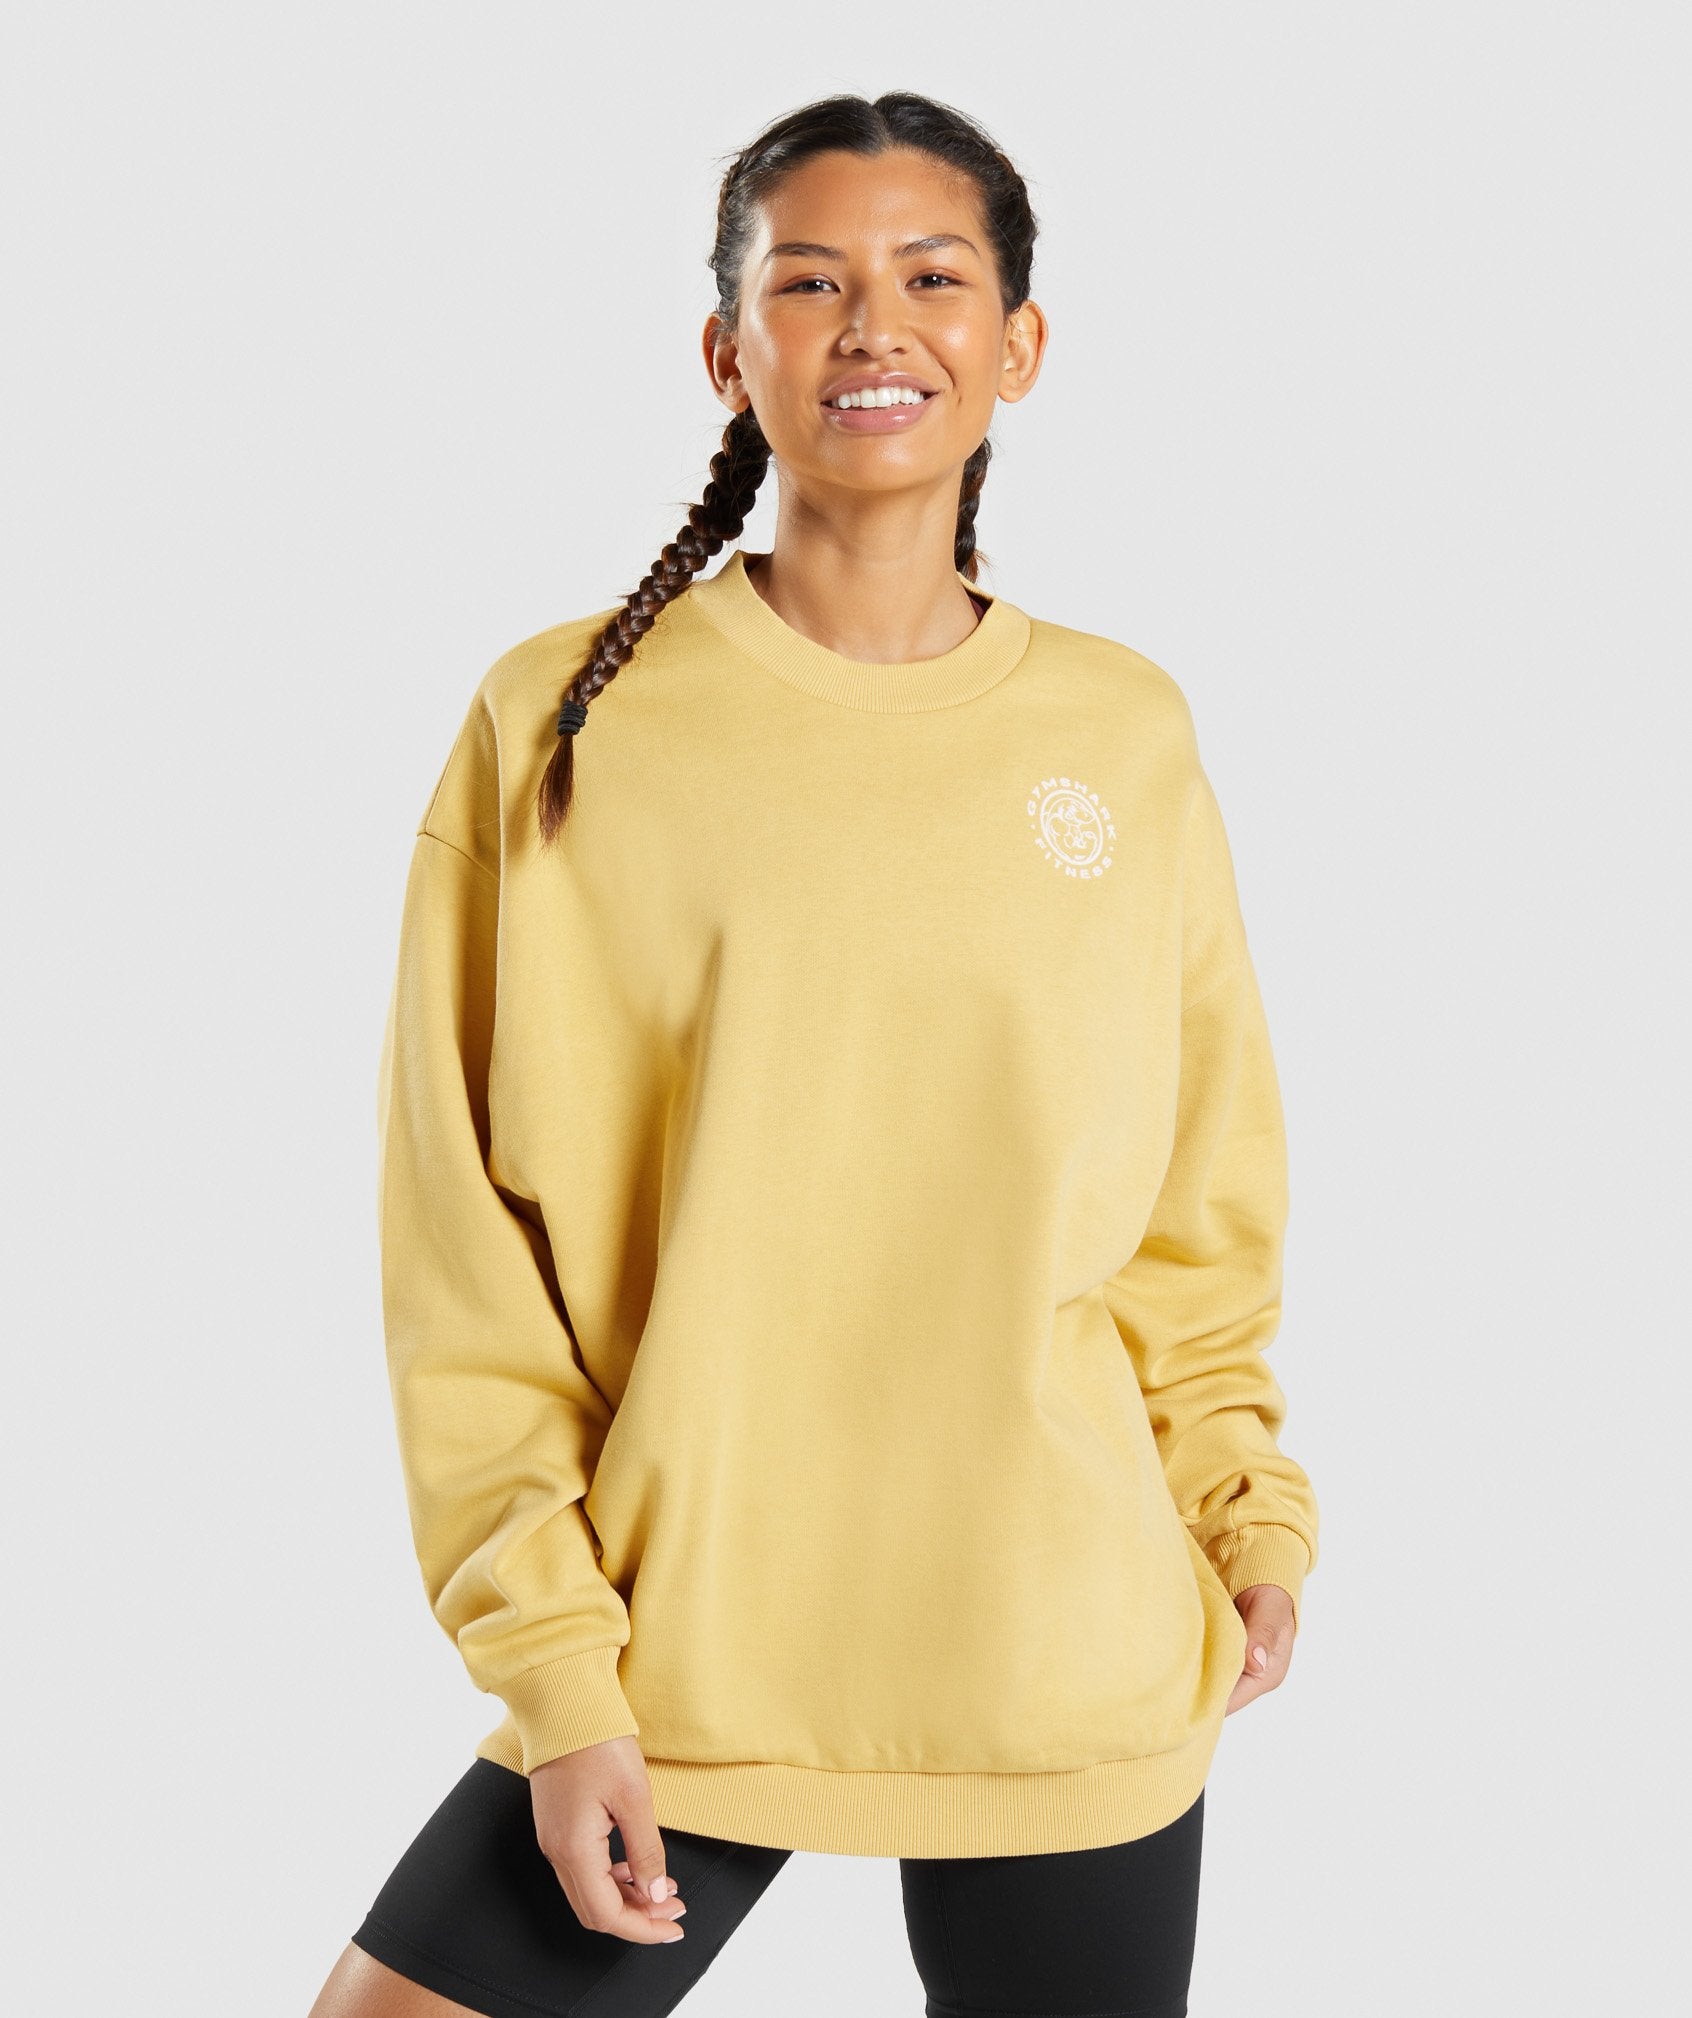 Legacy Graphic Sweatshirt in Yellow - view 1